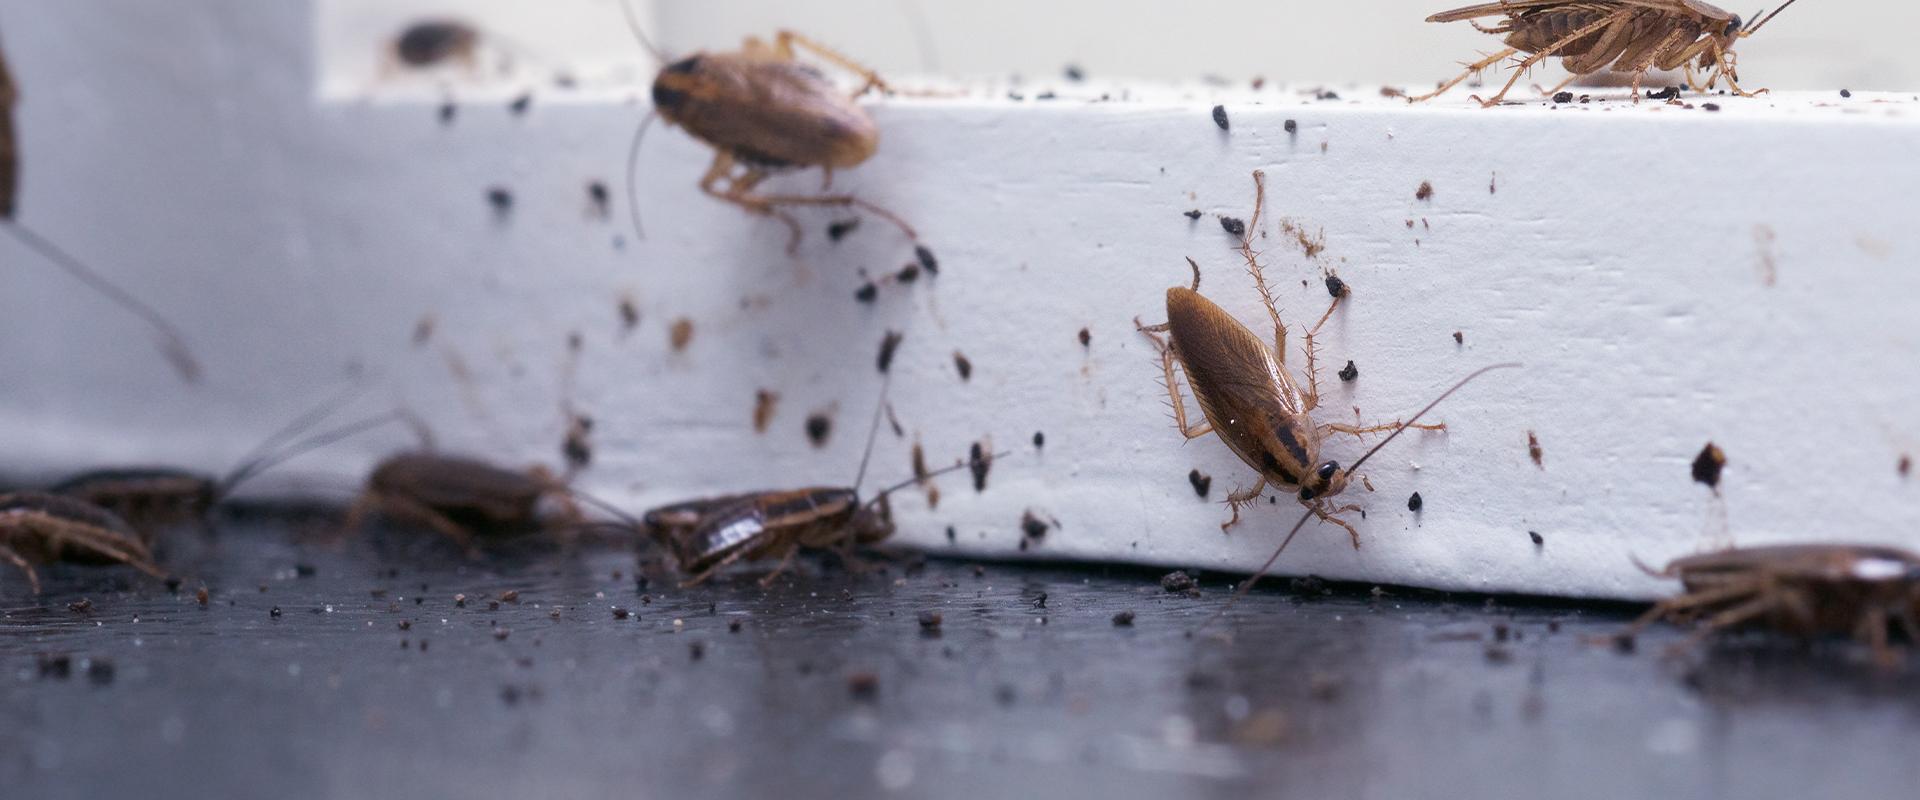 cockroaches crawling around windowsill